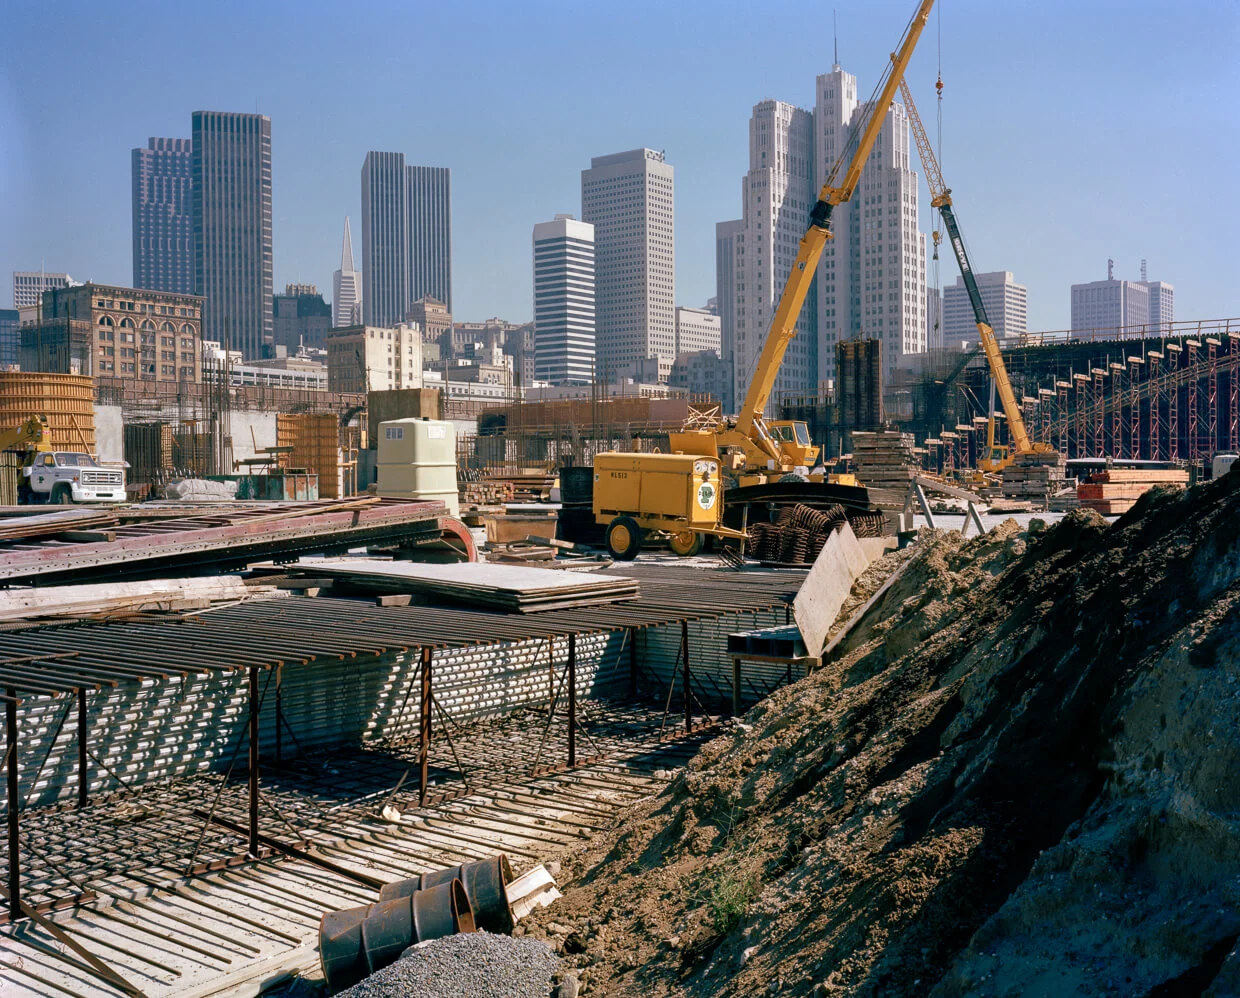 Moscone Center Under Construction, 1980